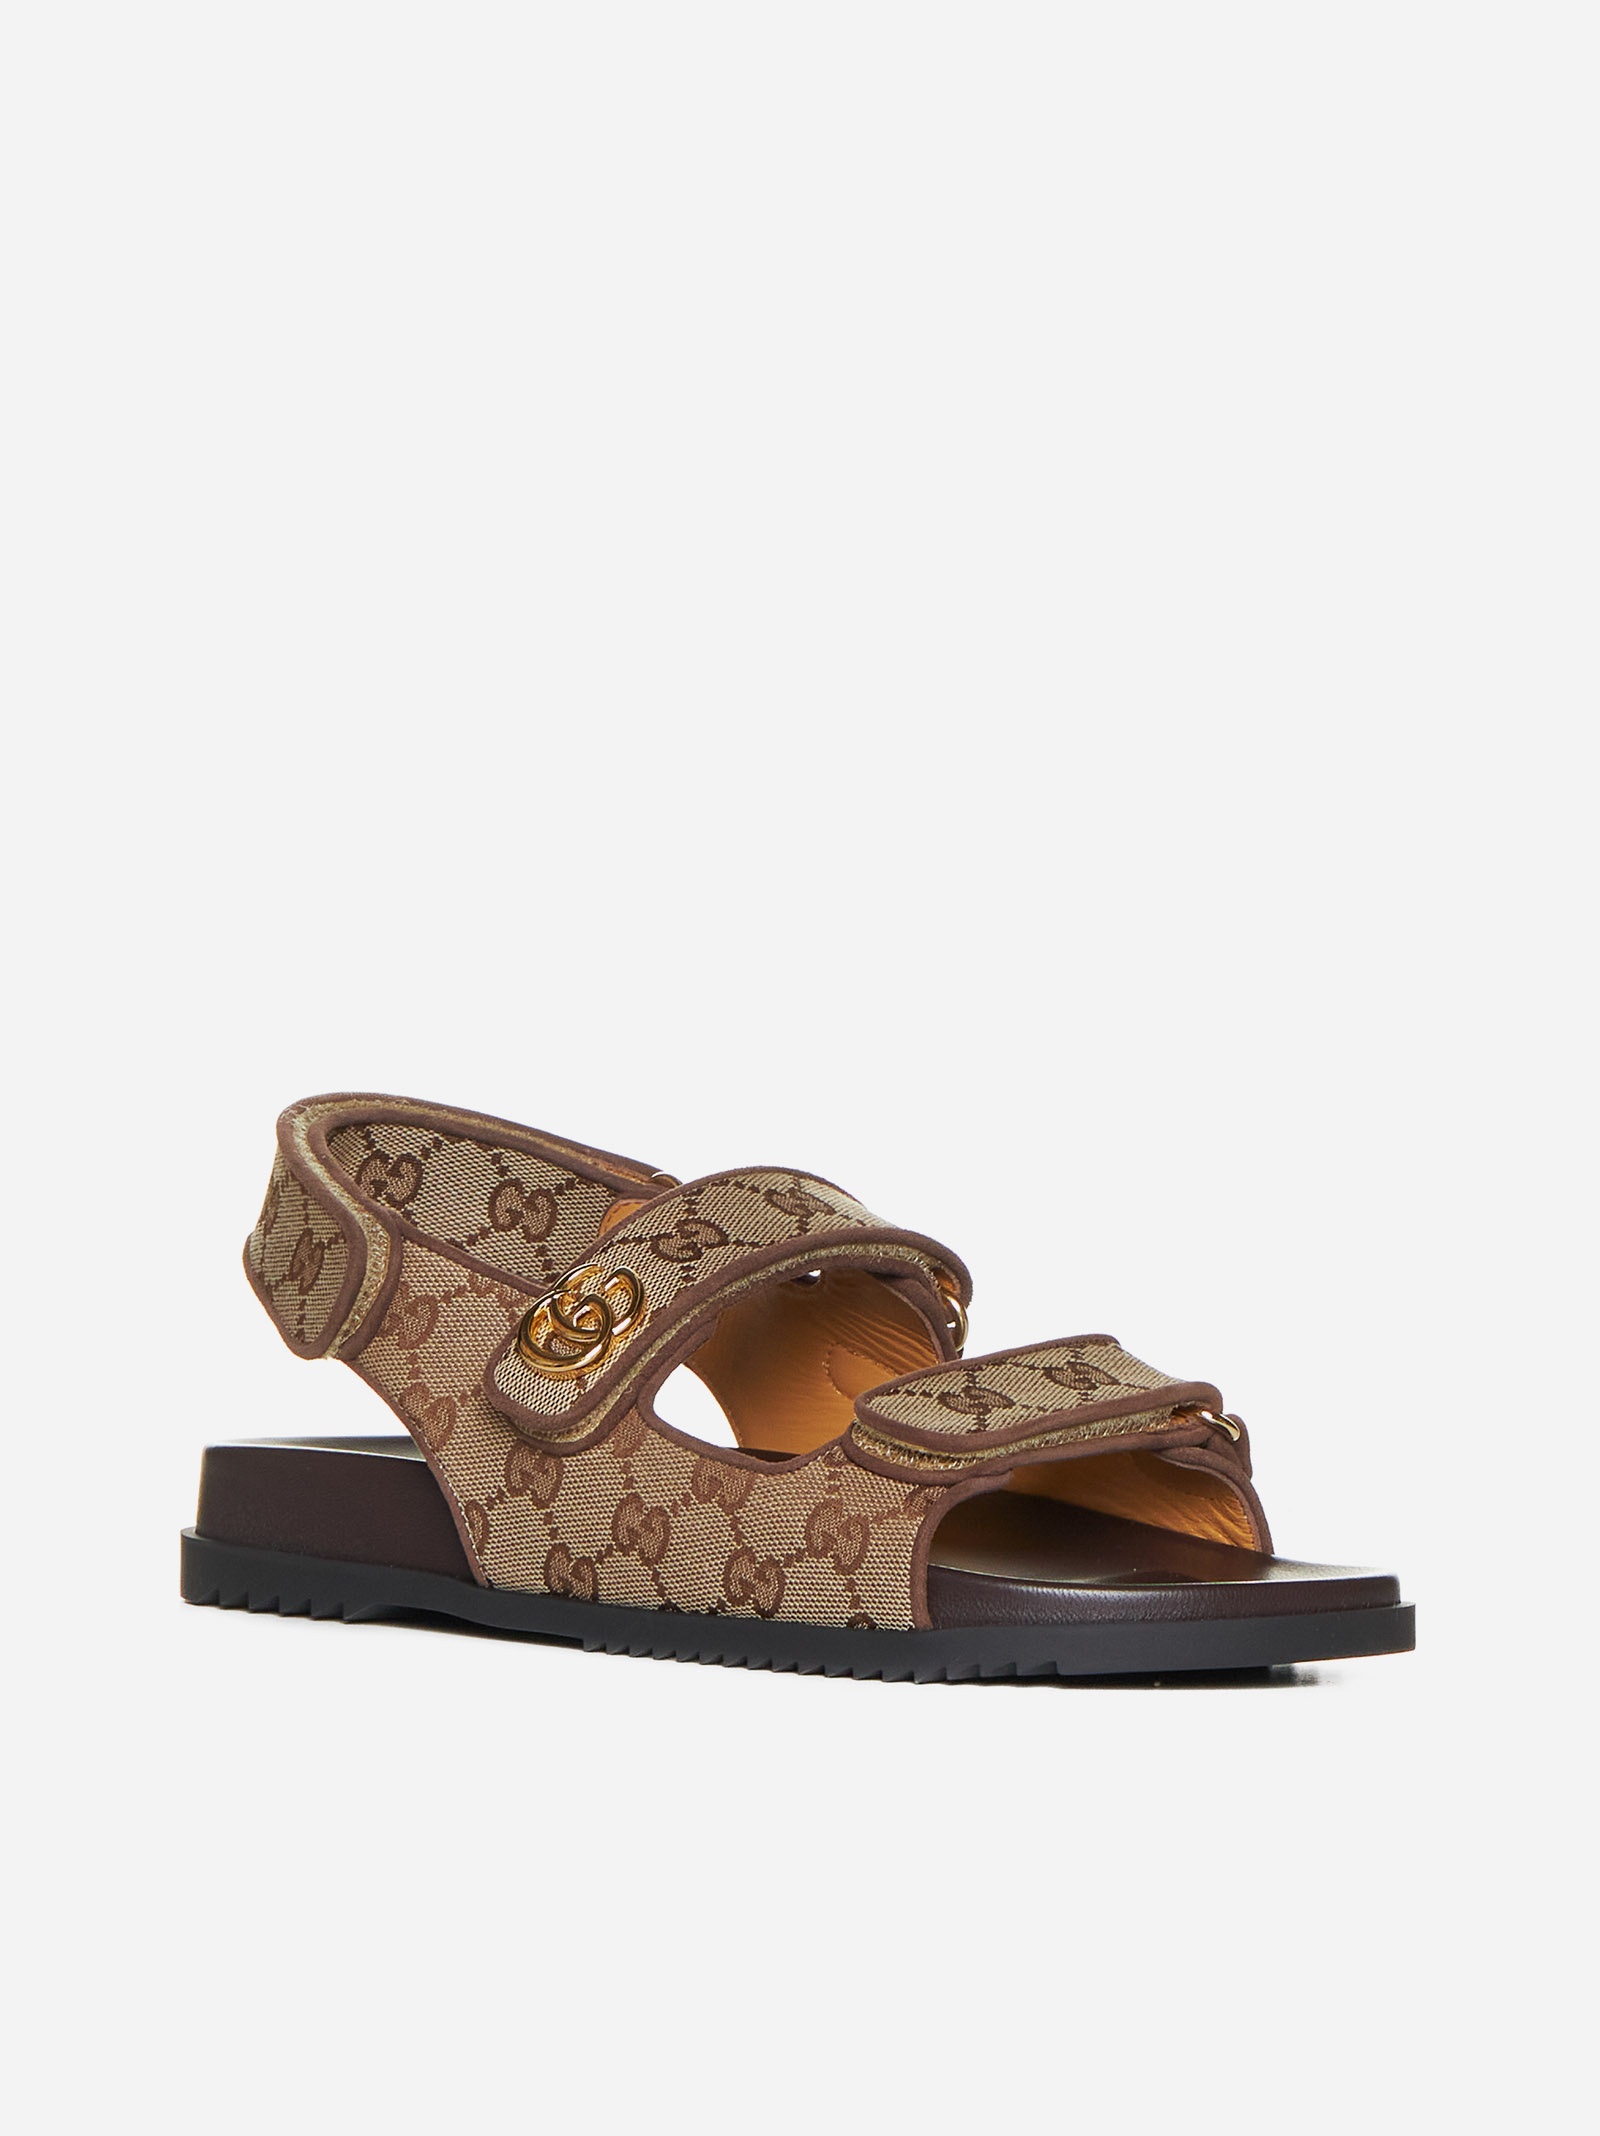 GG fabric sandals - 2